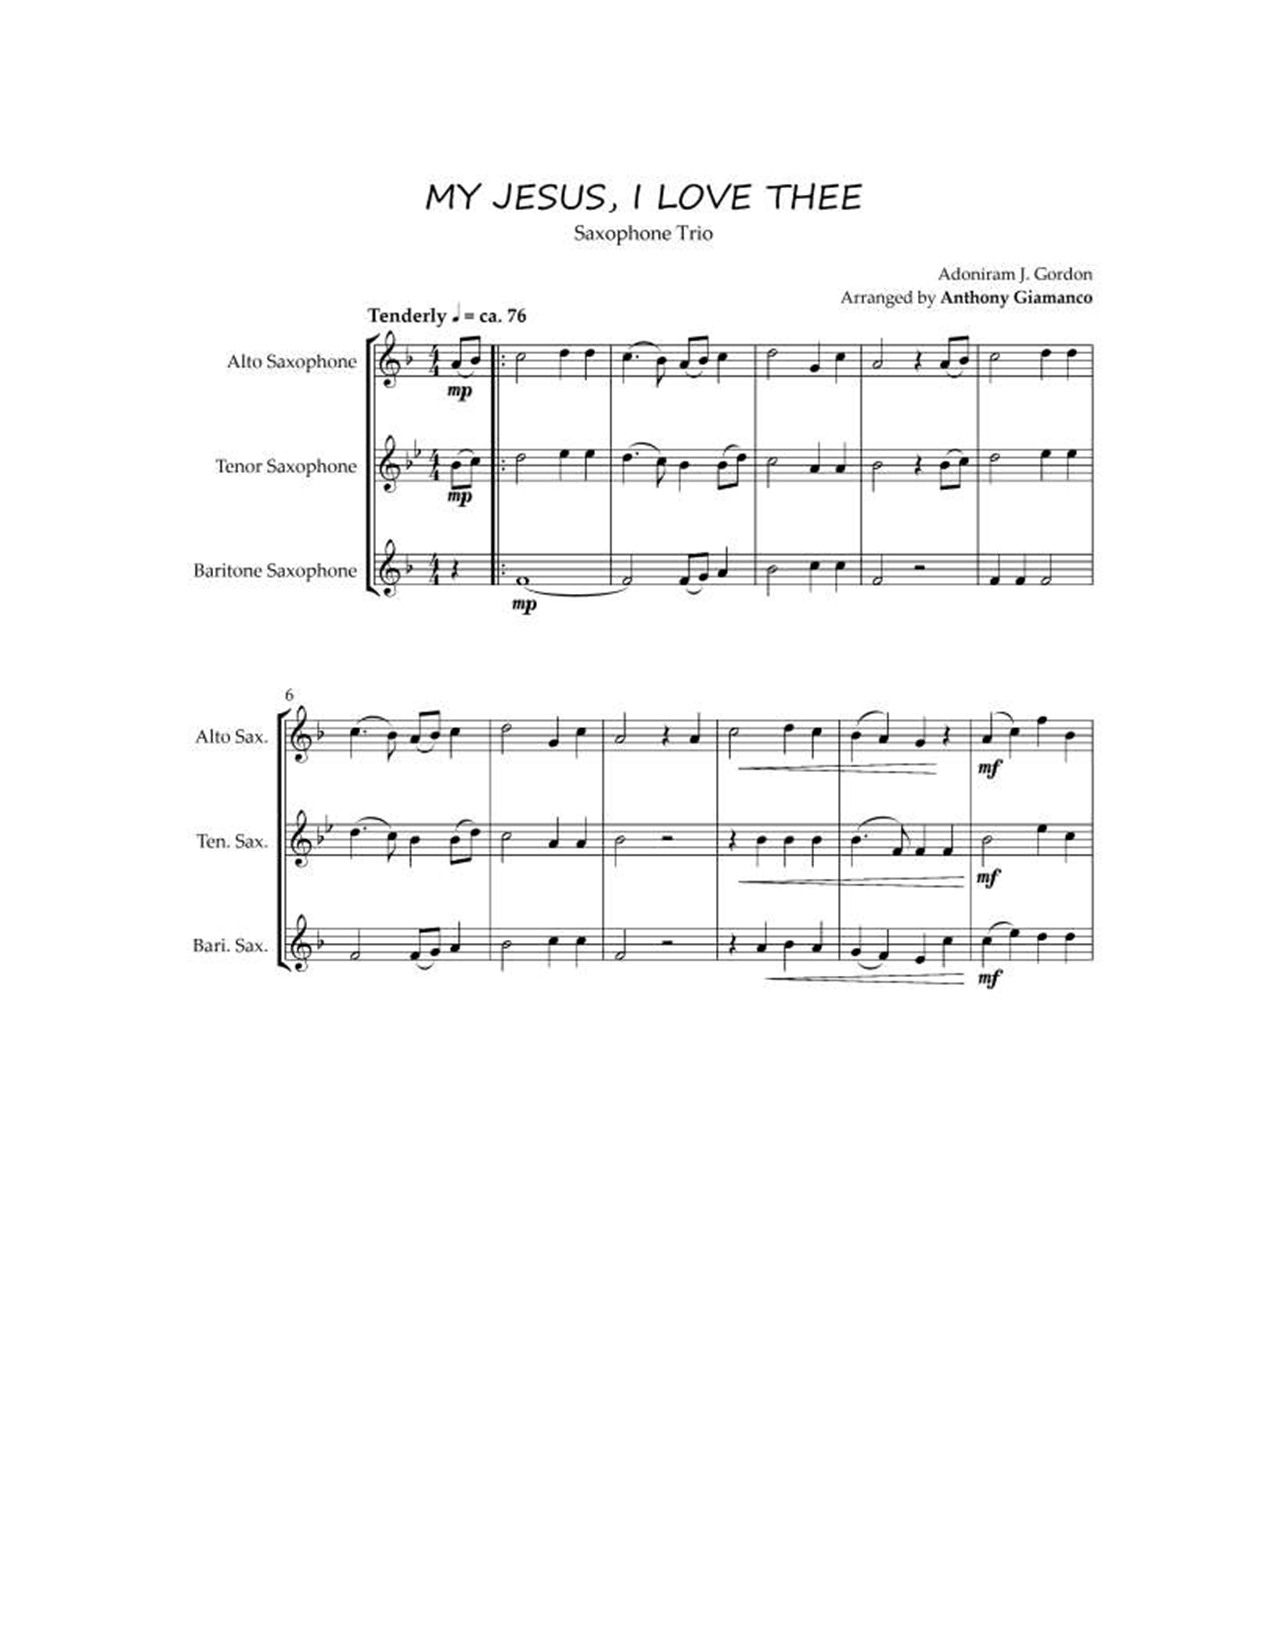 MY JESUS, I LOVE THEE - Saxophone Trio (ATB) - Sheet Music Marketplace